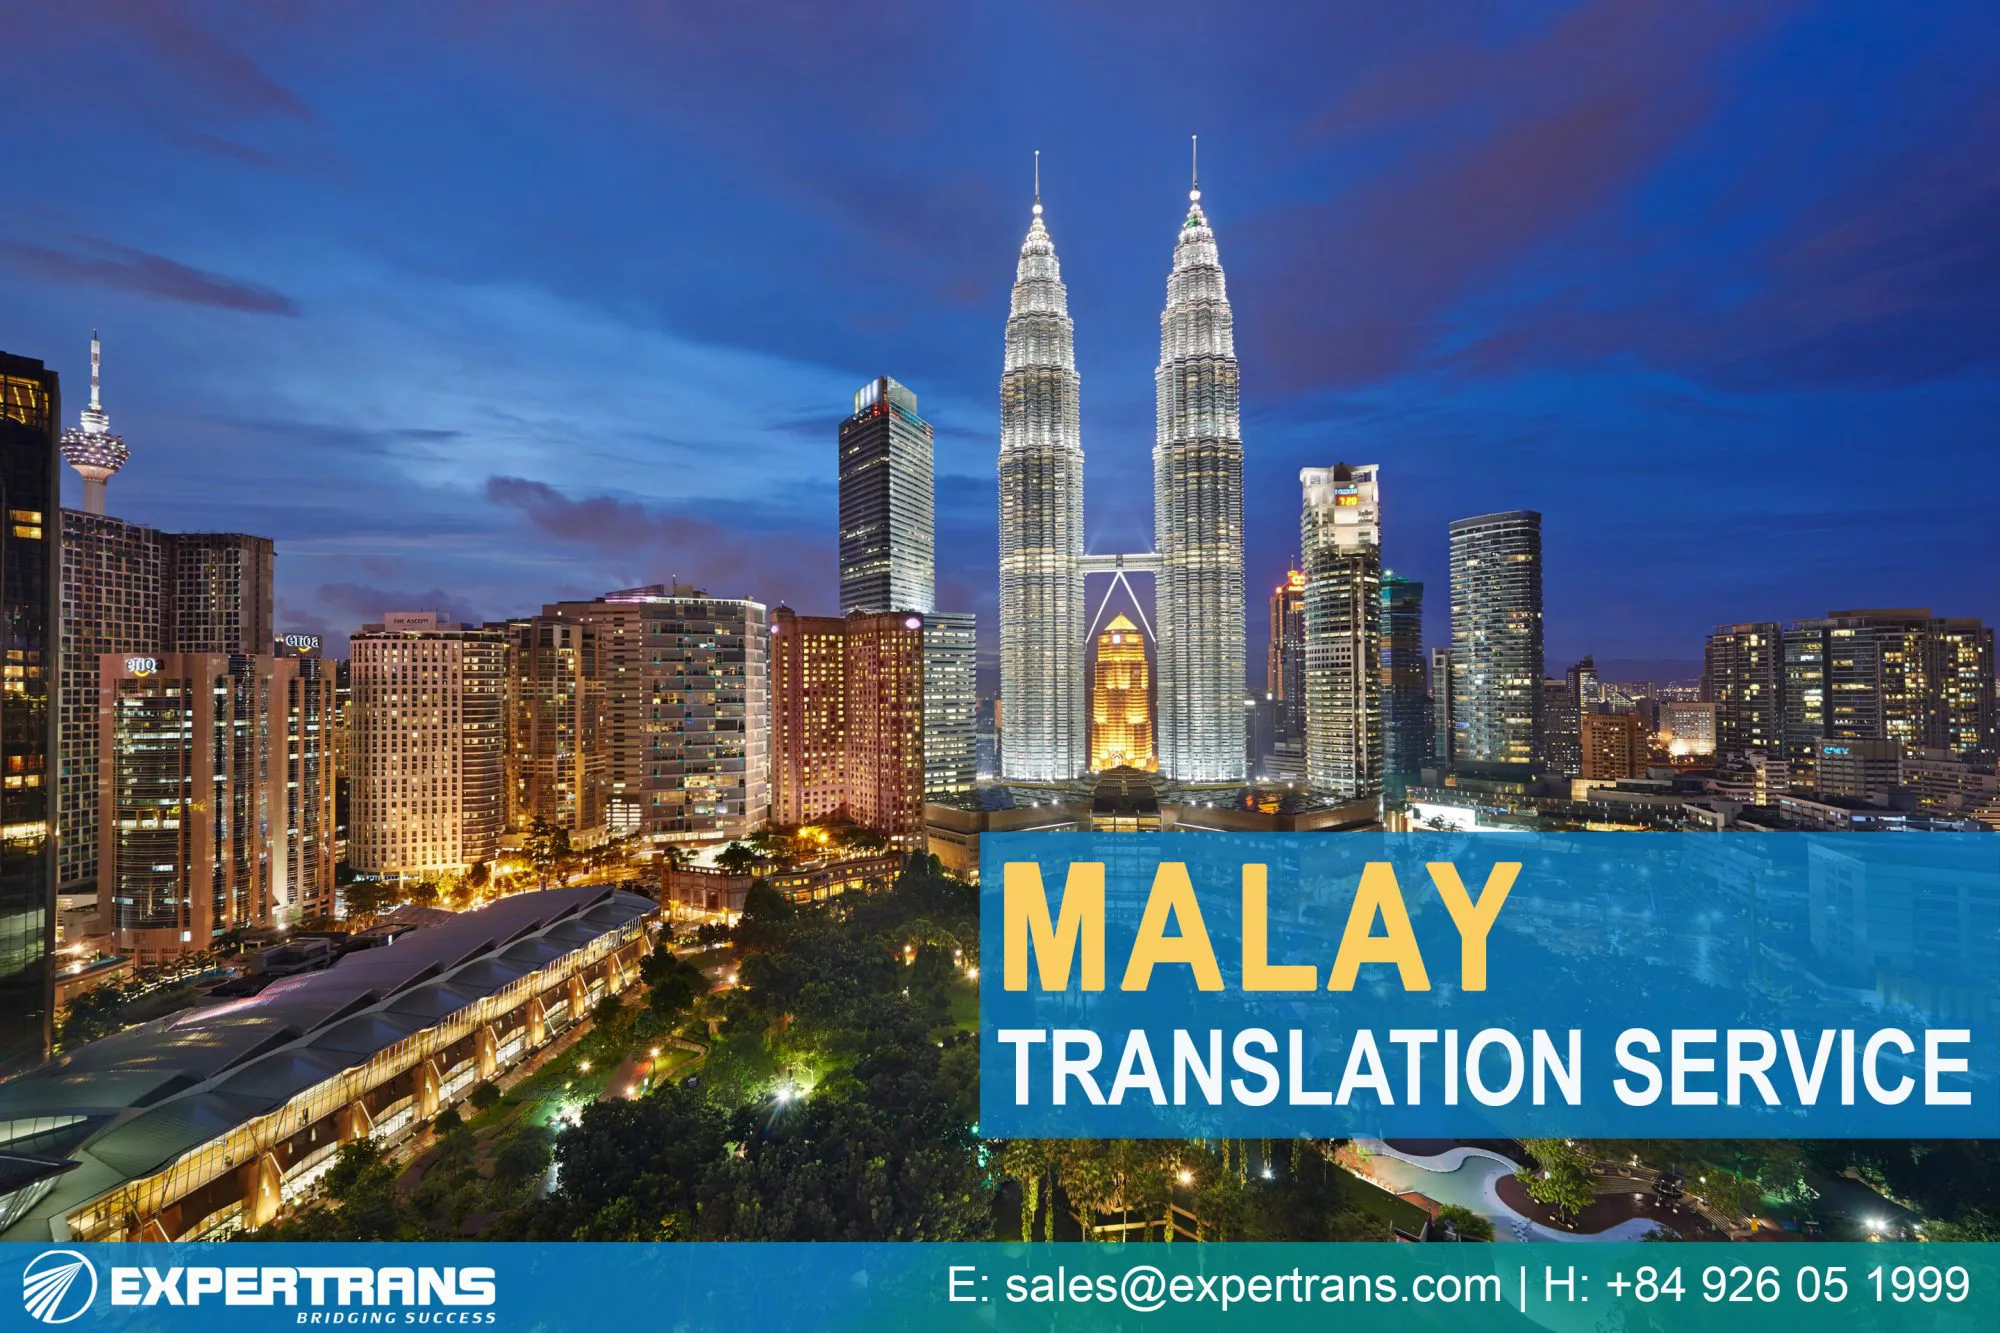 Malay Translation Service 99 Accuracy Fortune Global 500 S Choice